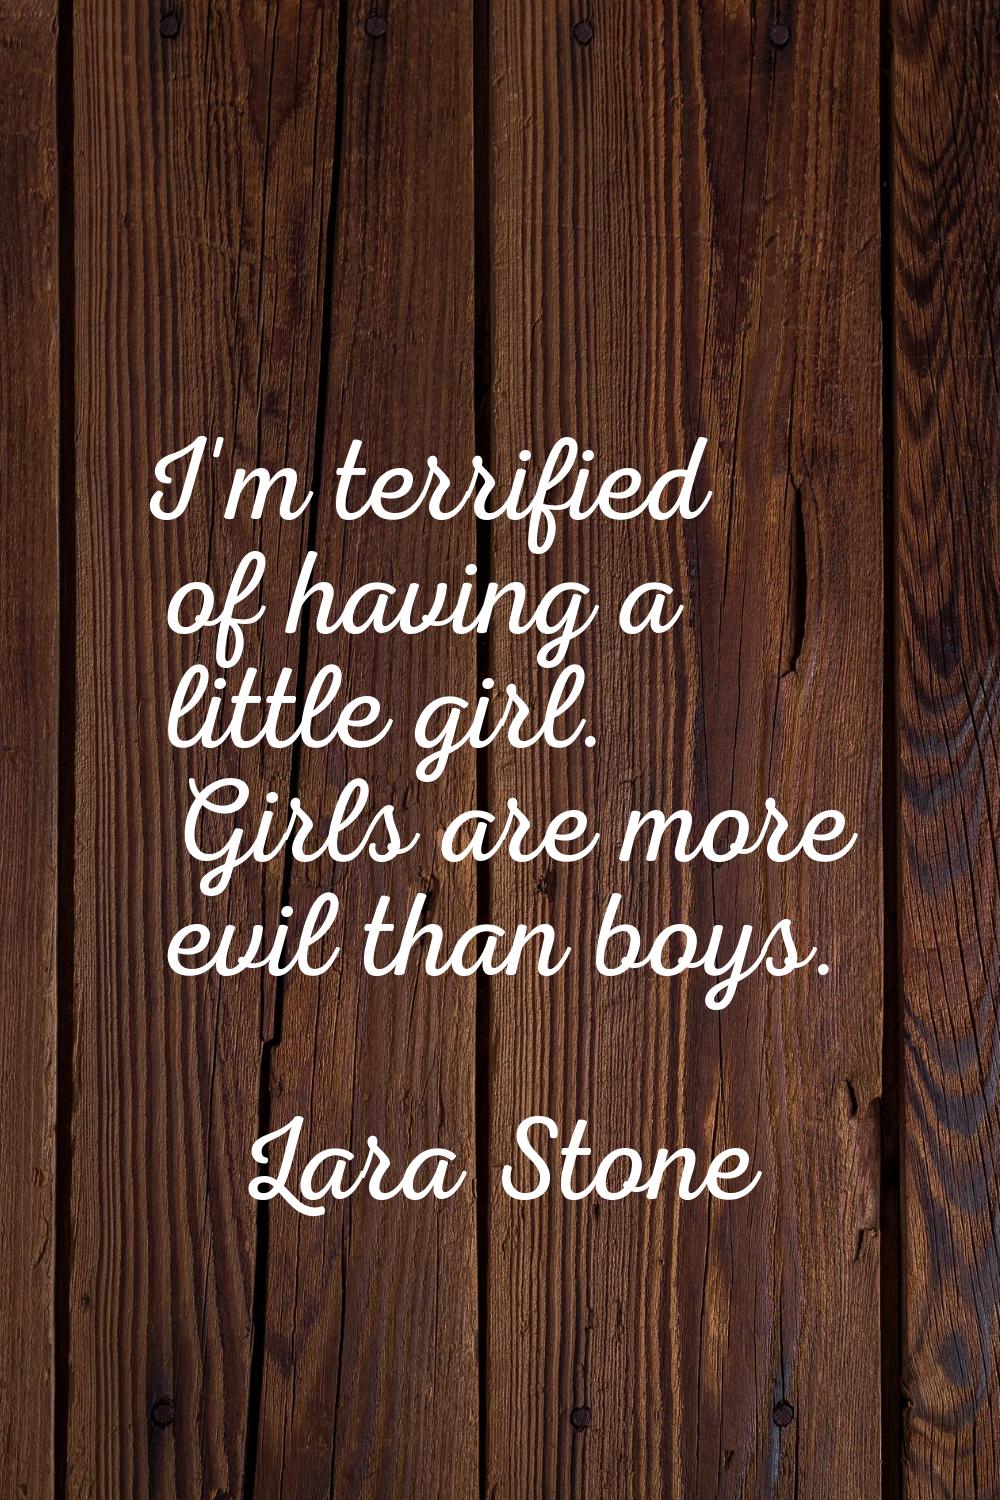 I'm terrified of having a little girl. Girls are more evil than boys.